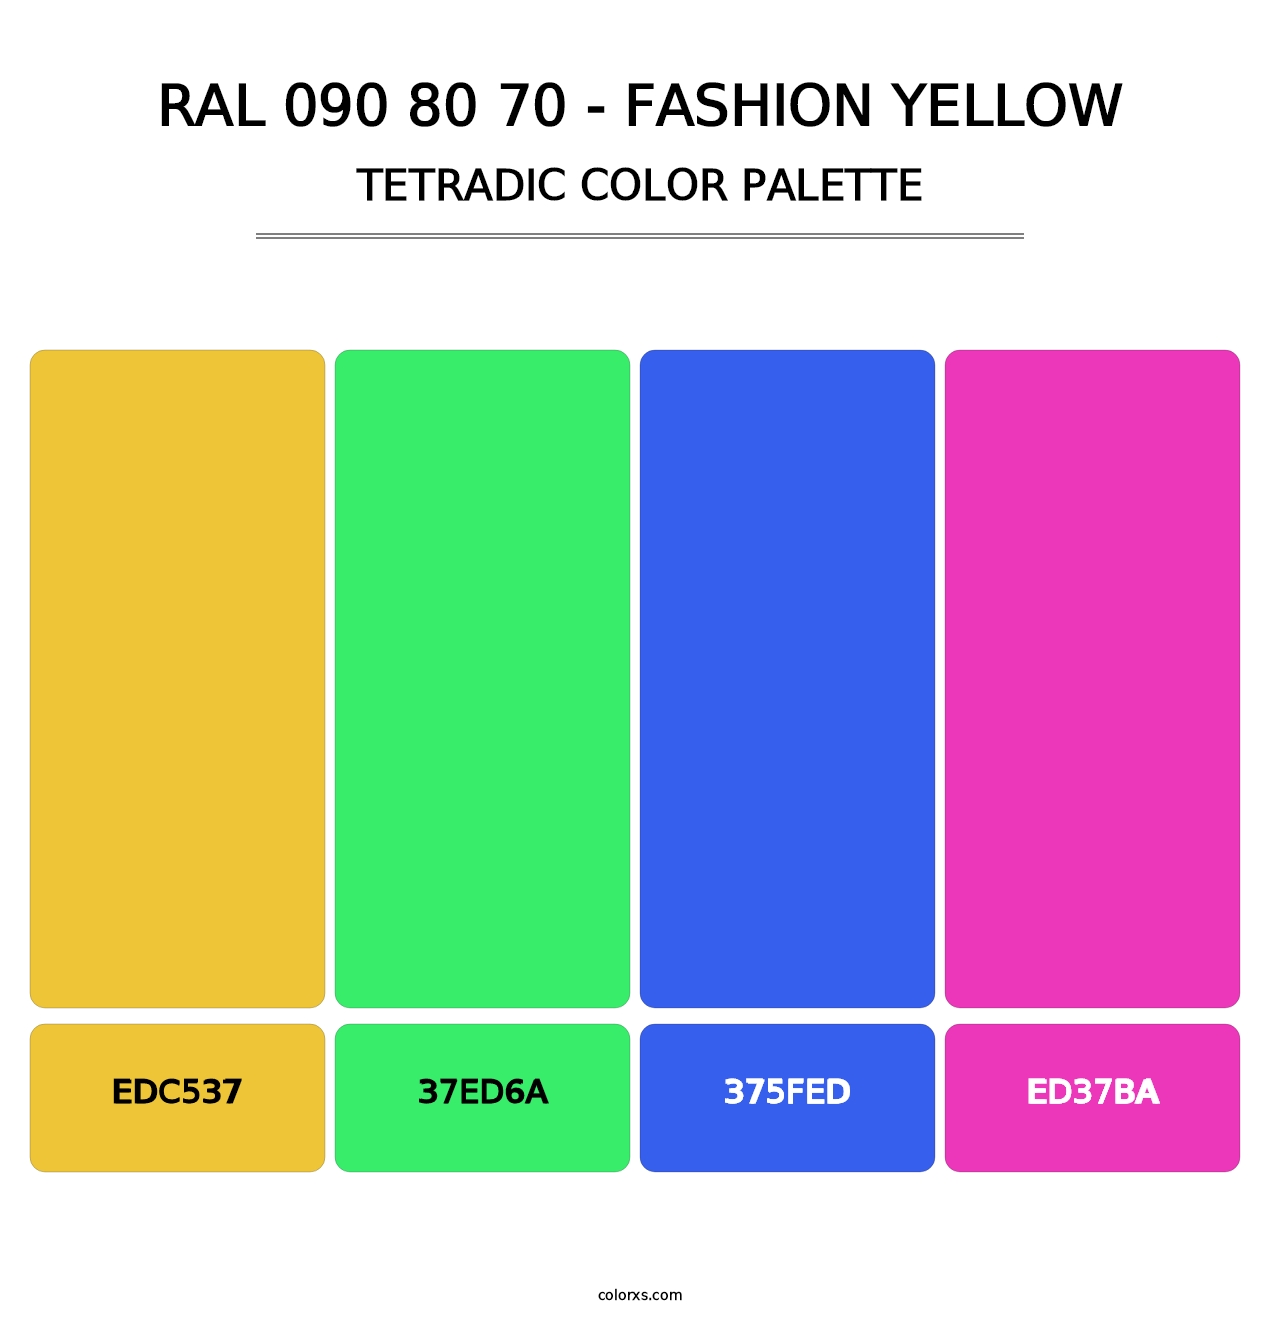 RAL 090 80 70 - Fashion Yellow - Tetradic Color Palette